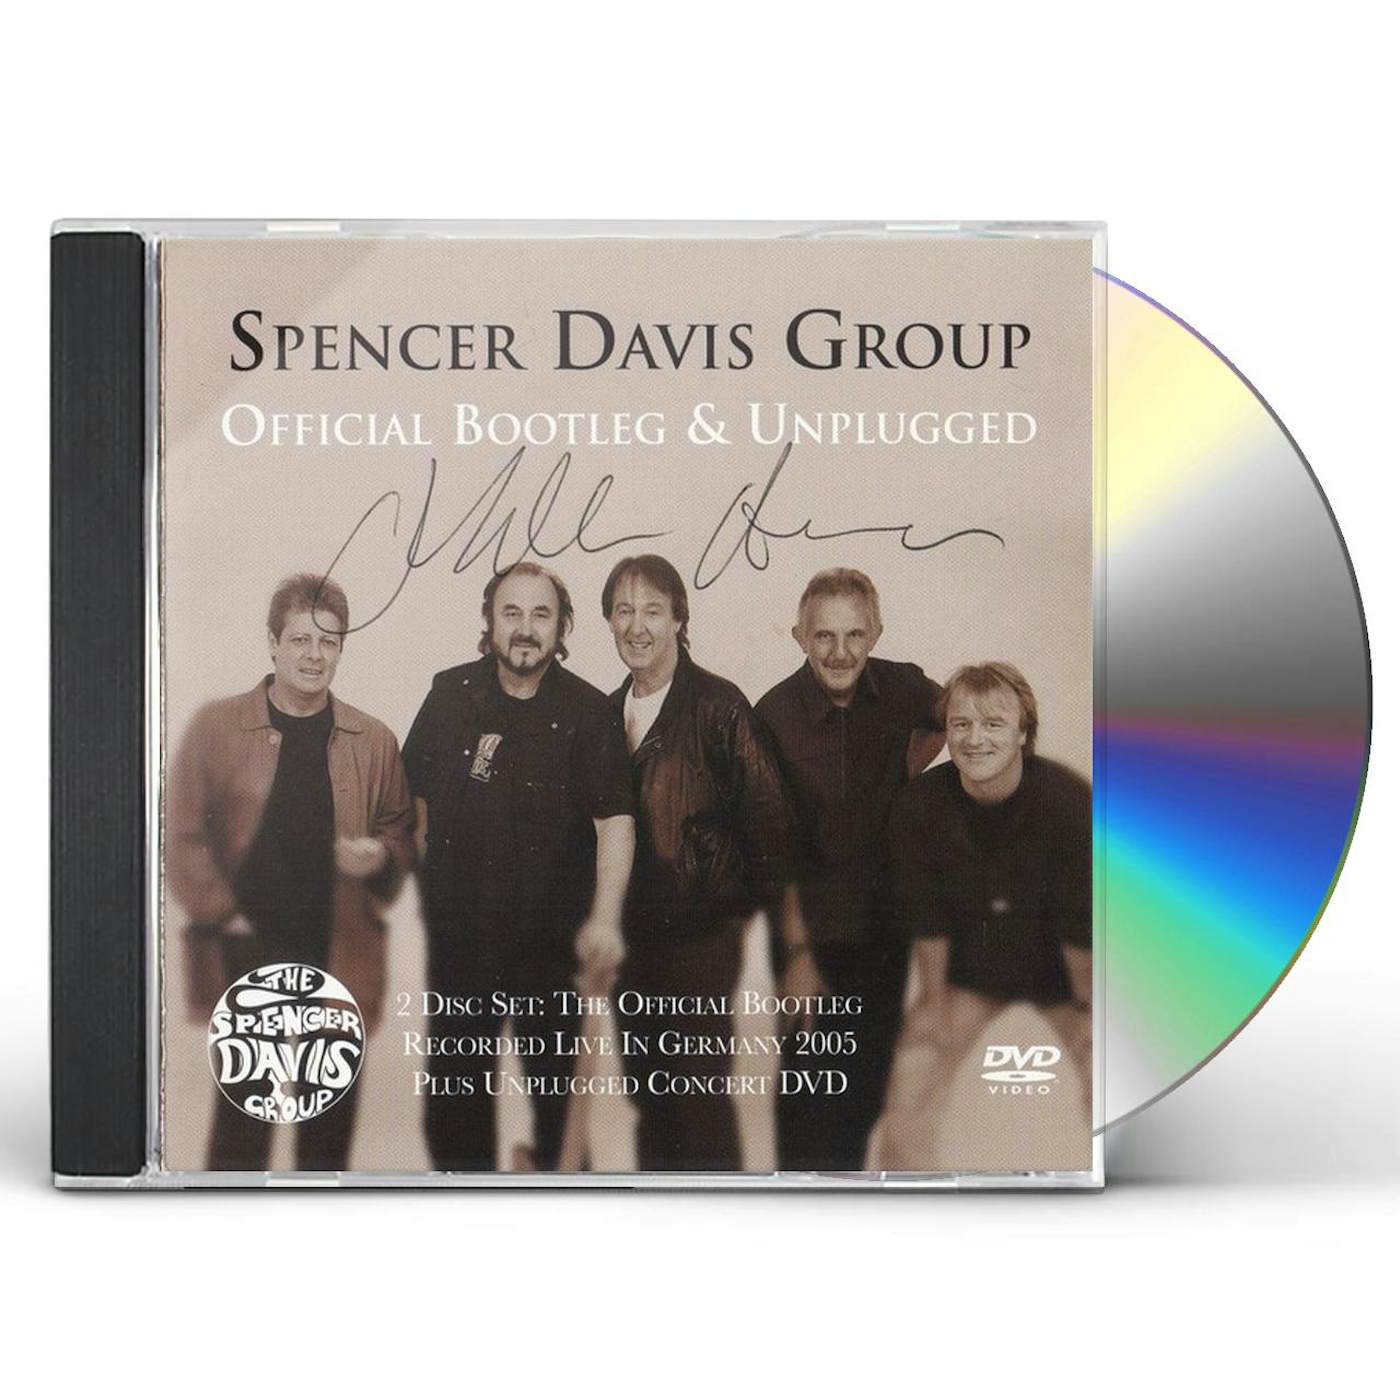 The Spencer Davis Group OFFICIALBOOTLEG & UNPLUGGED CD